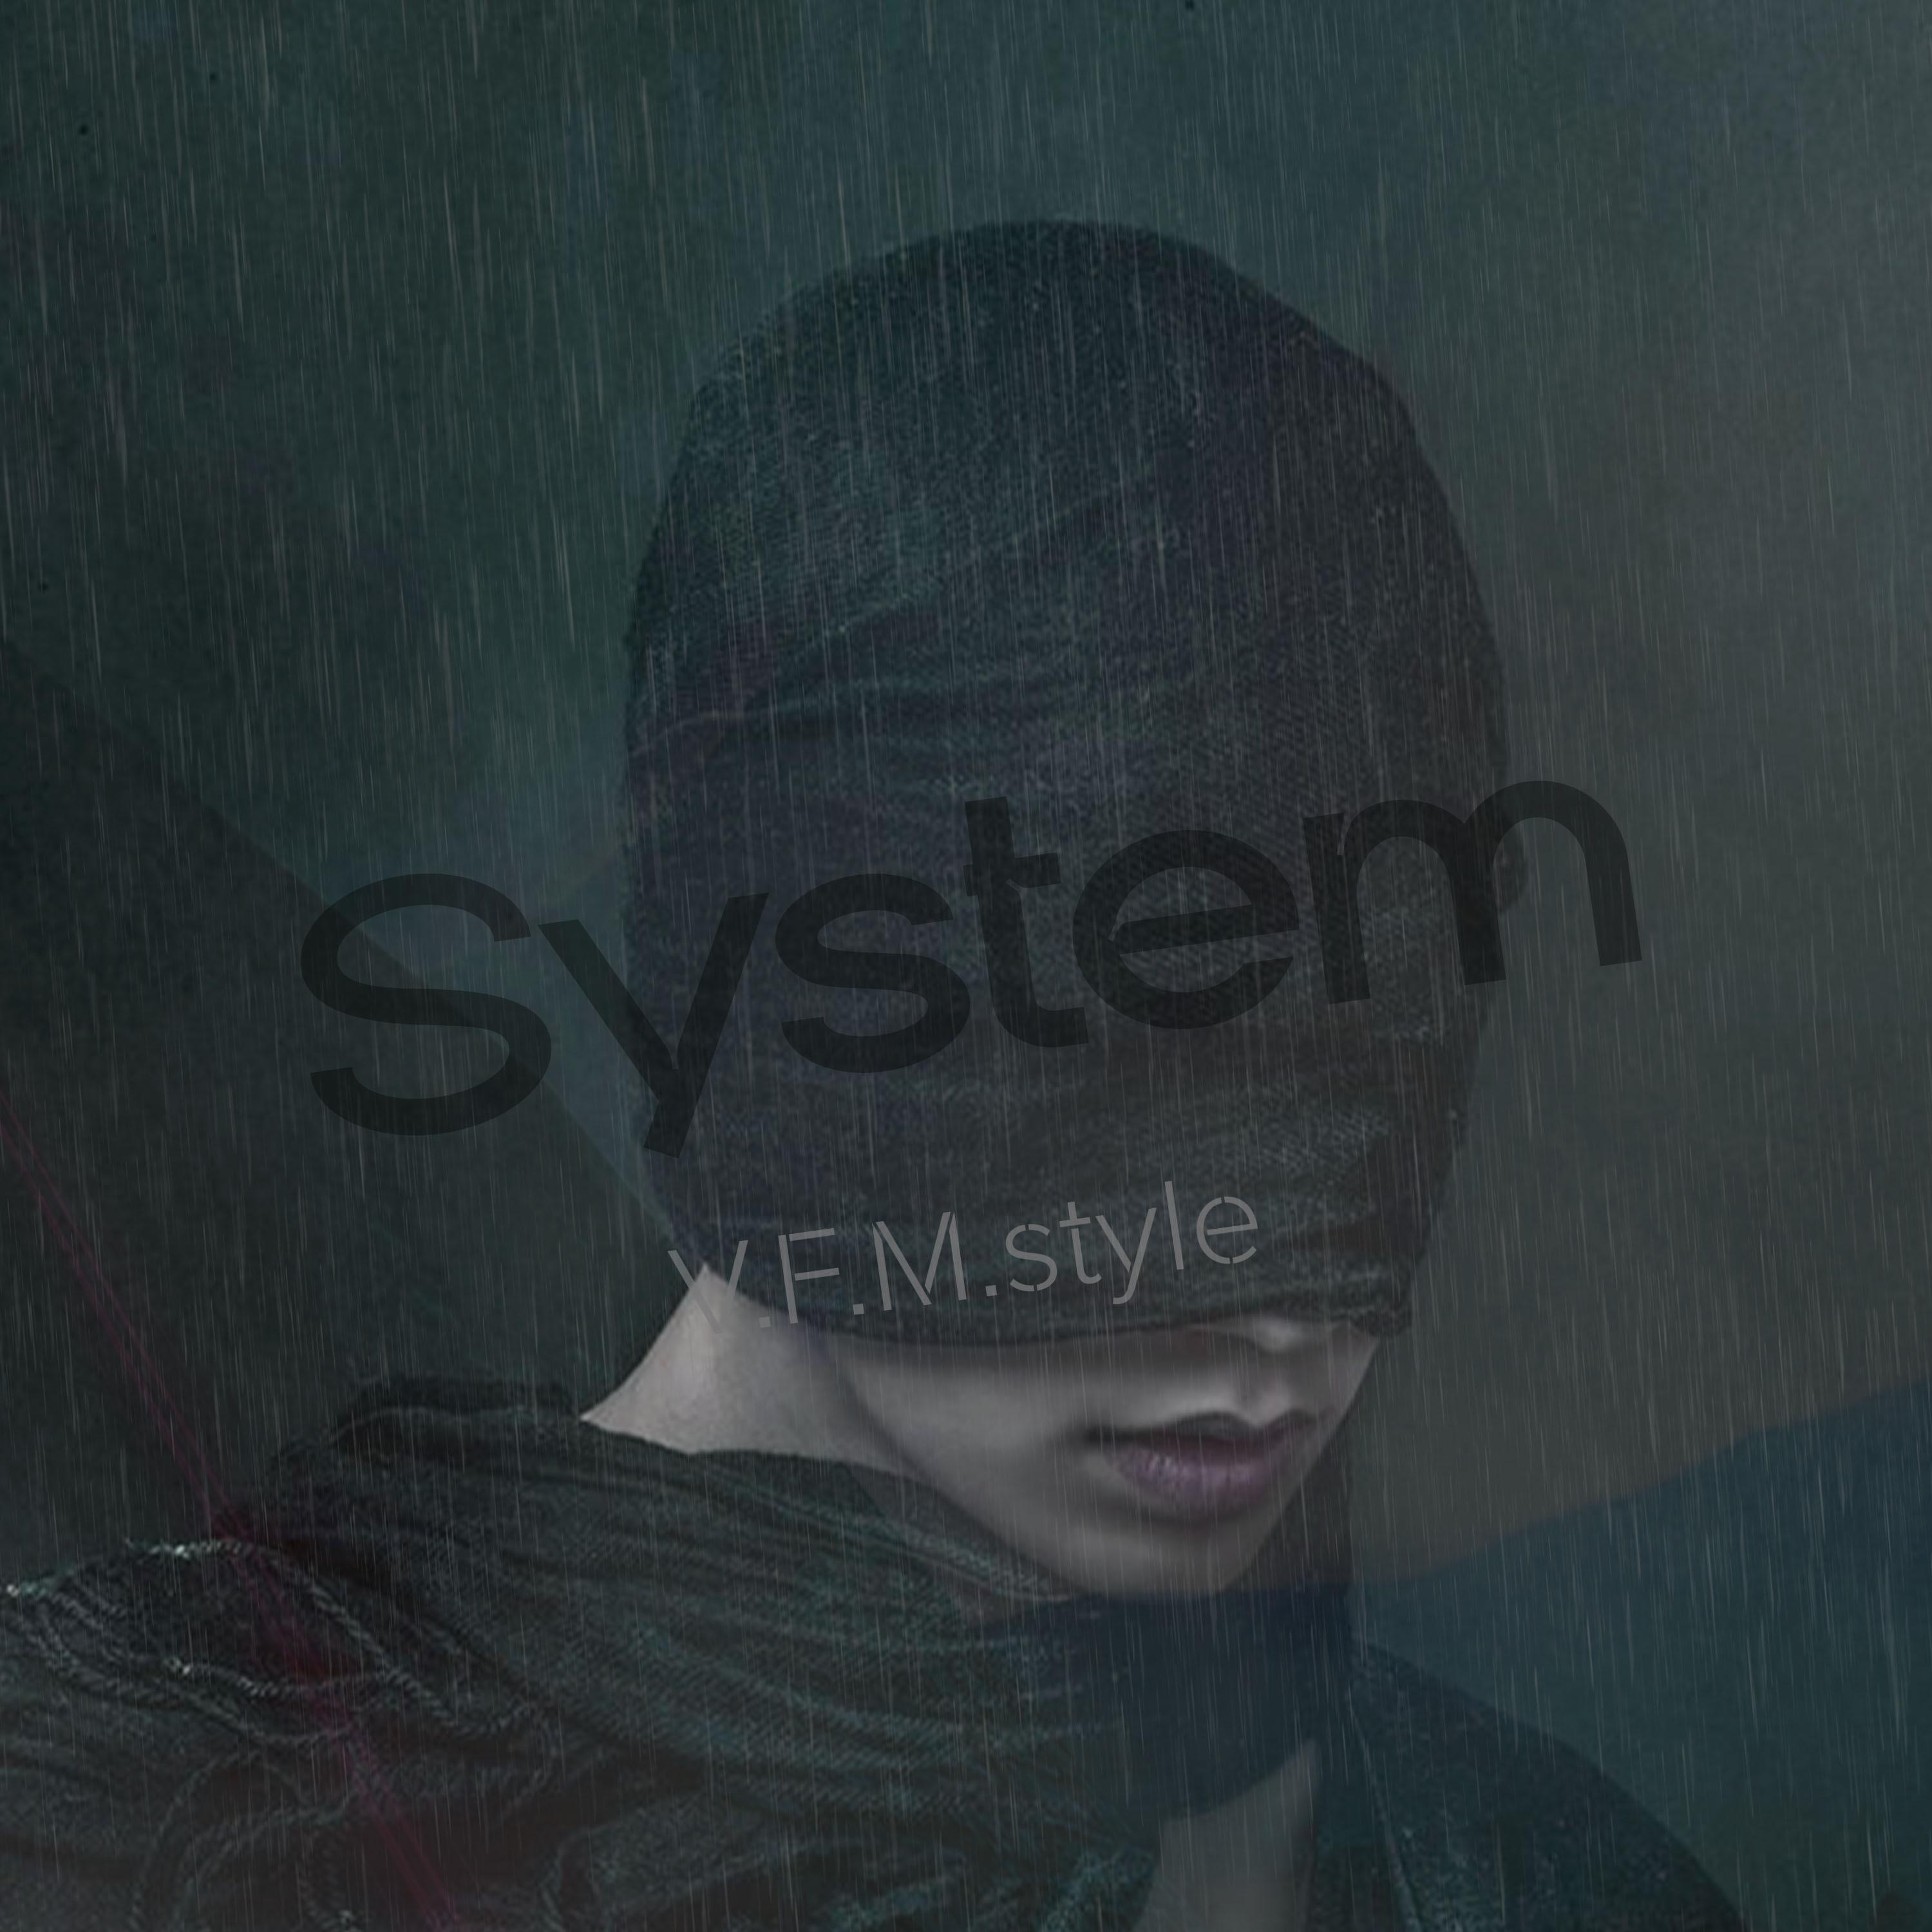 V.F.M.style - System